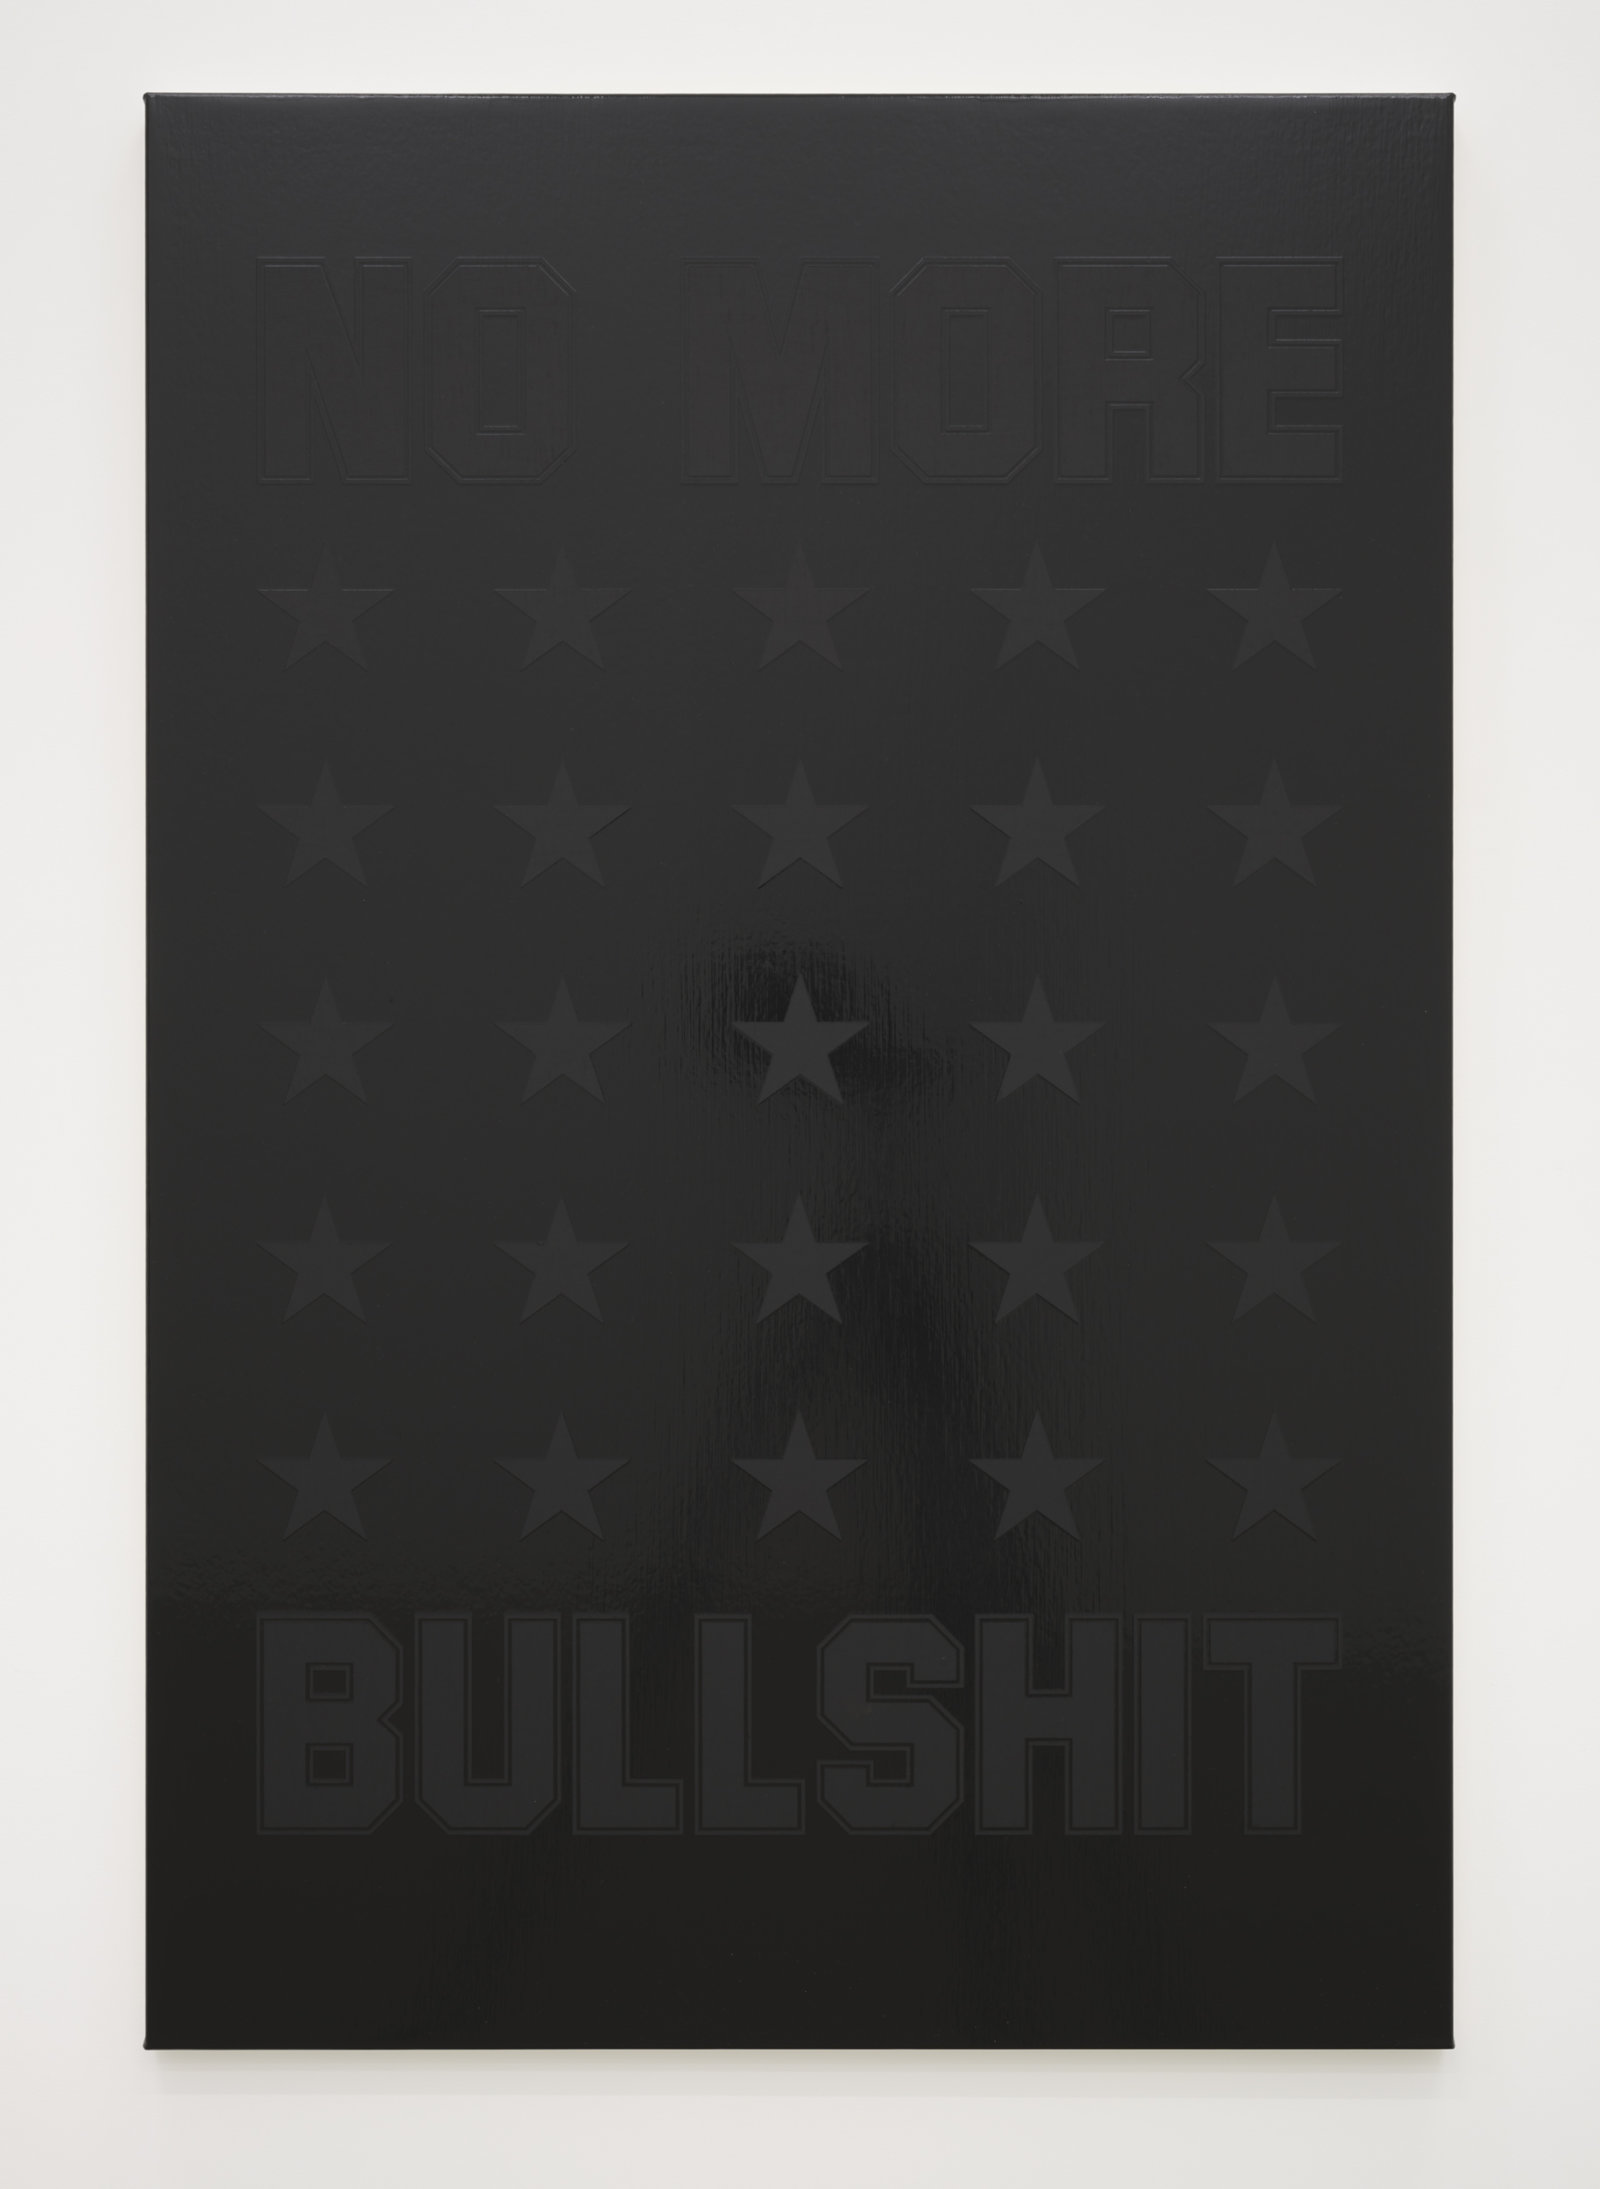 Ron Terada, No More Bullshit, 2023, acrylic on canvas, 48 x 32 in. (122 x 81 cm)